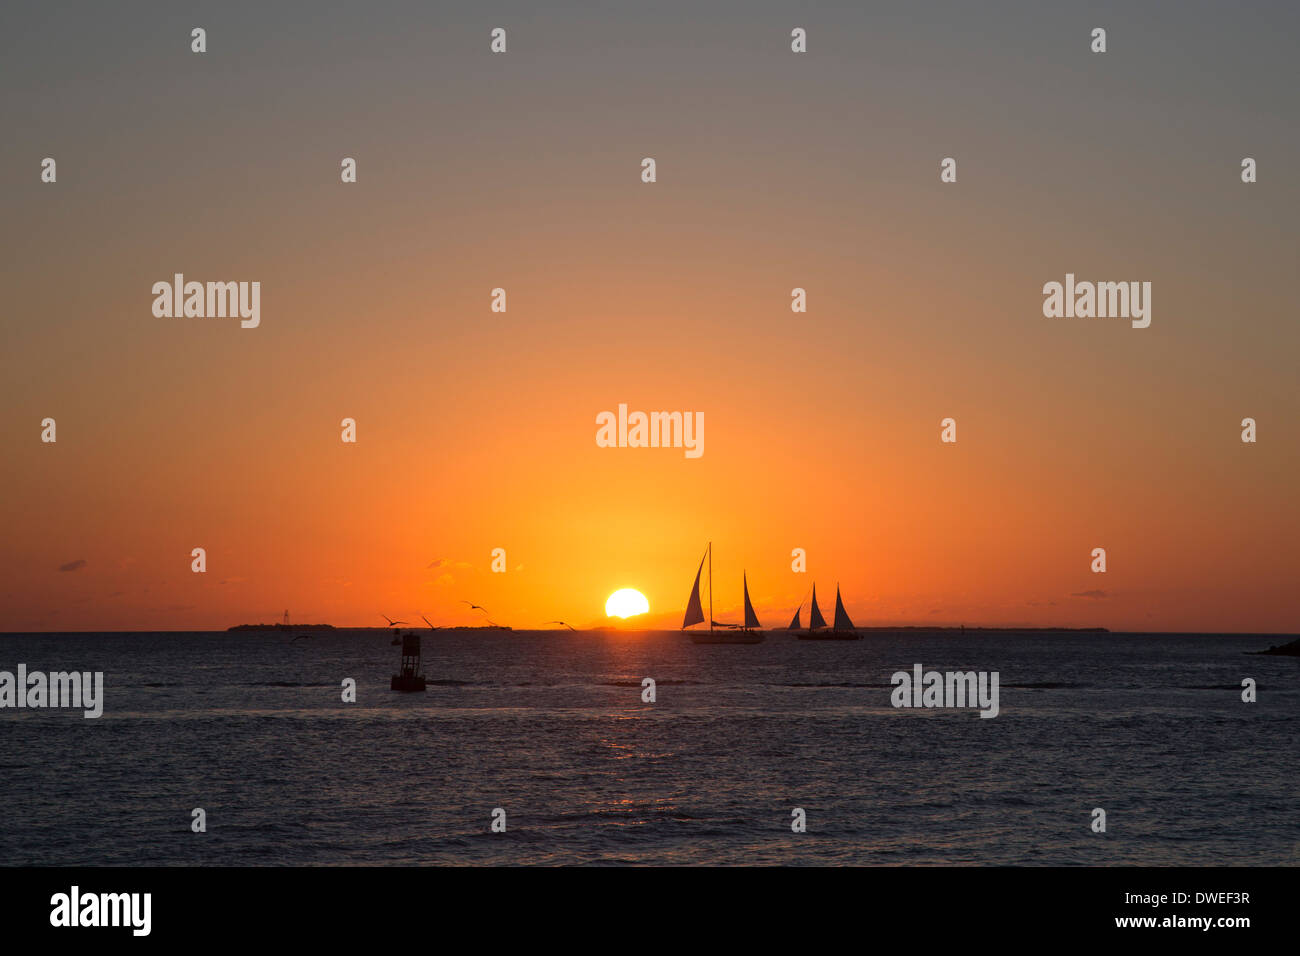 Key West, Florida - Sailboats at sunset. Stock Photo